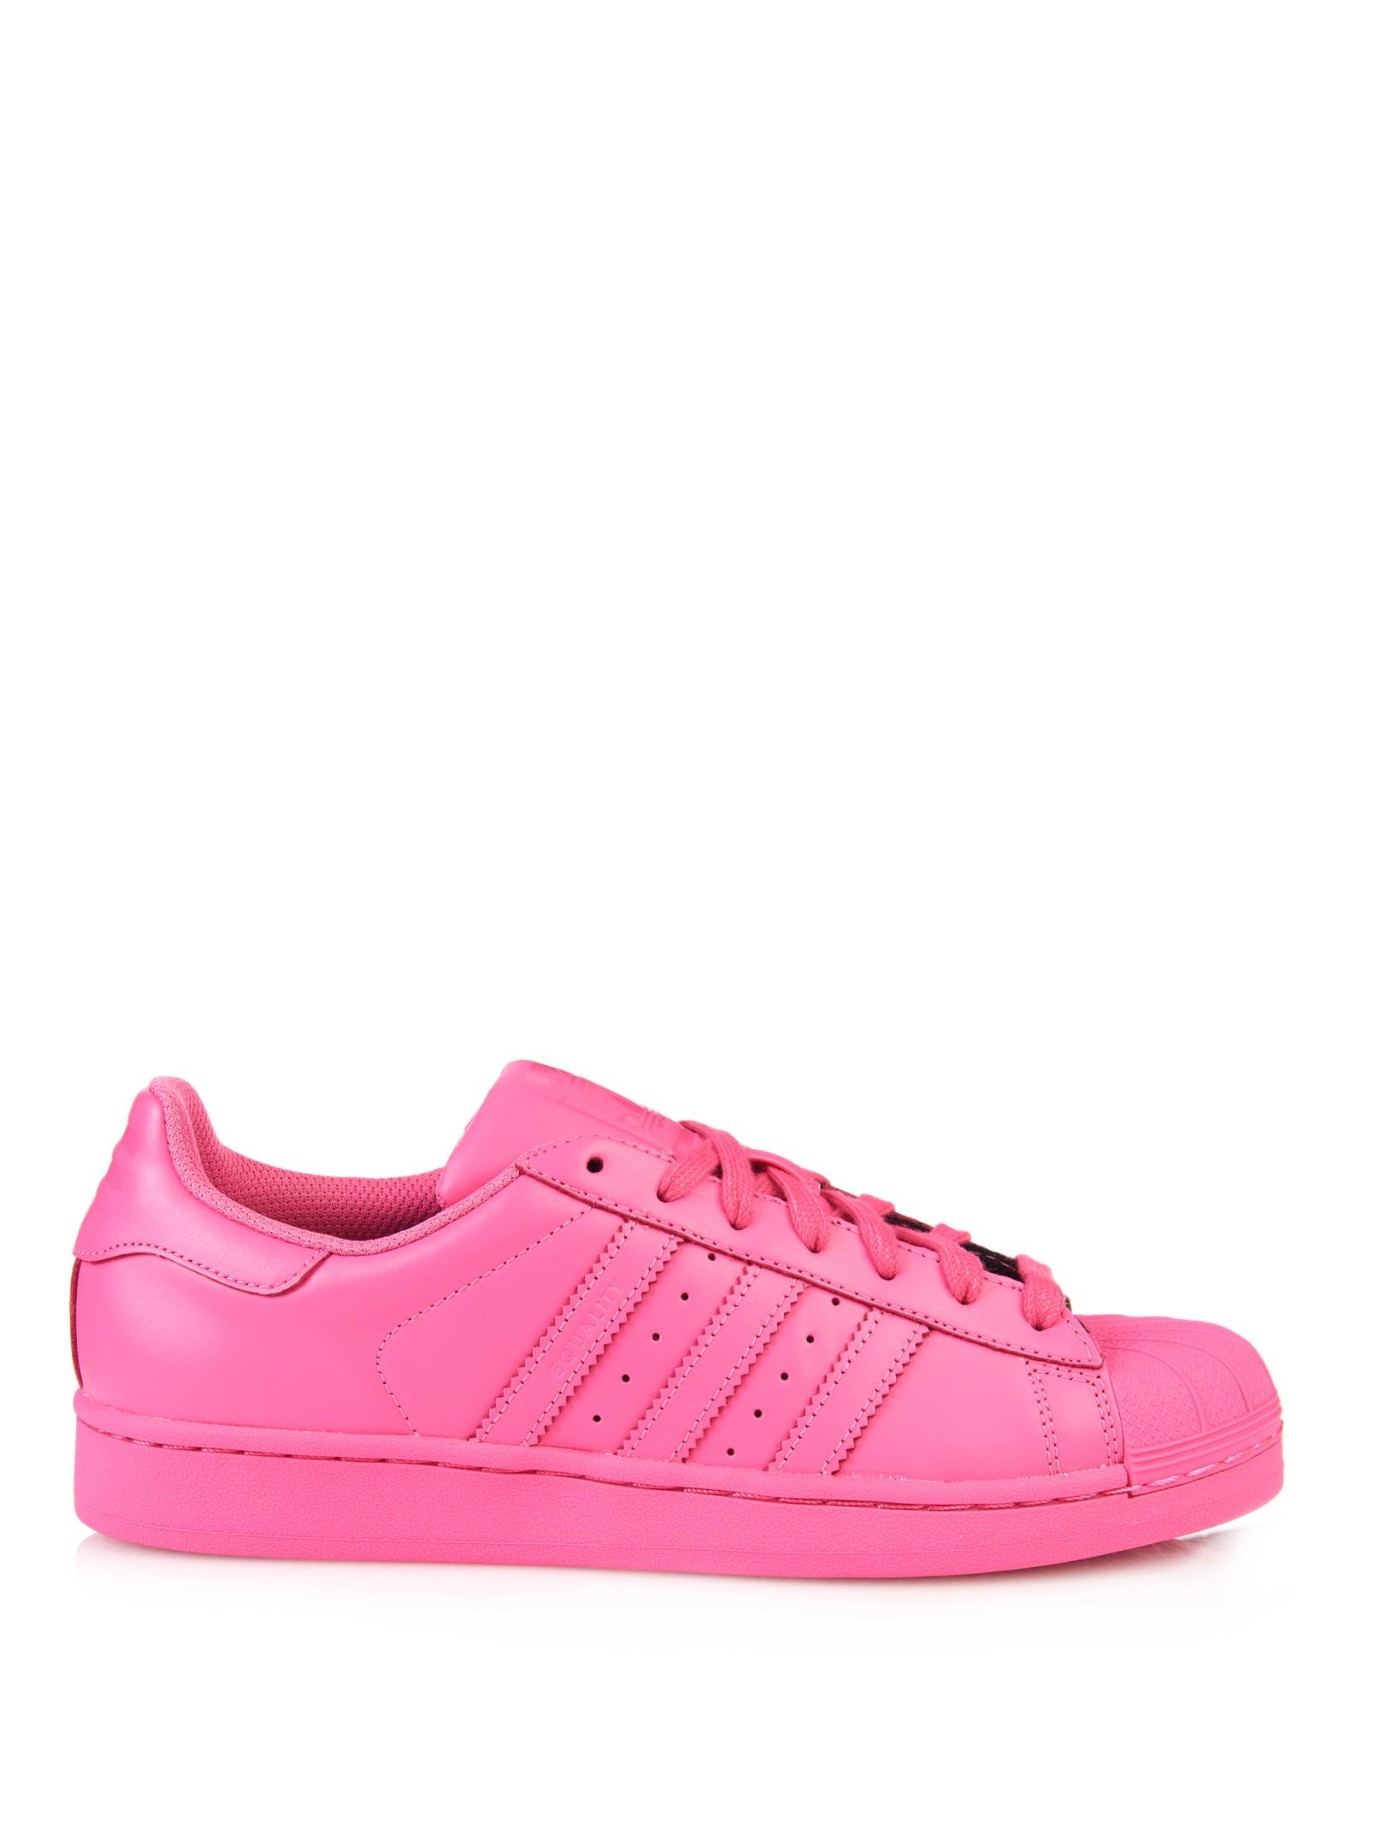 adidas originals supercolor superstar - trainers - light pink